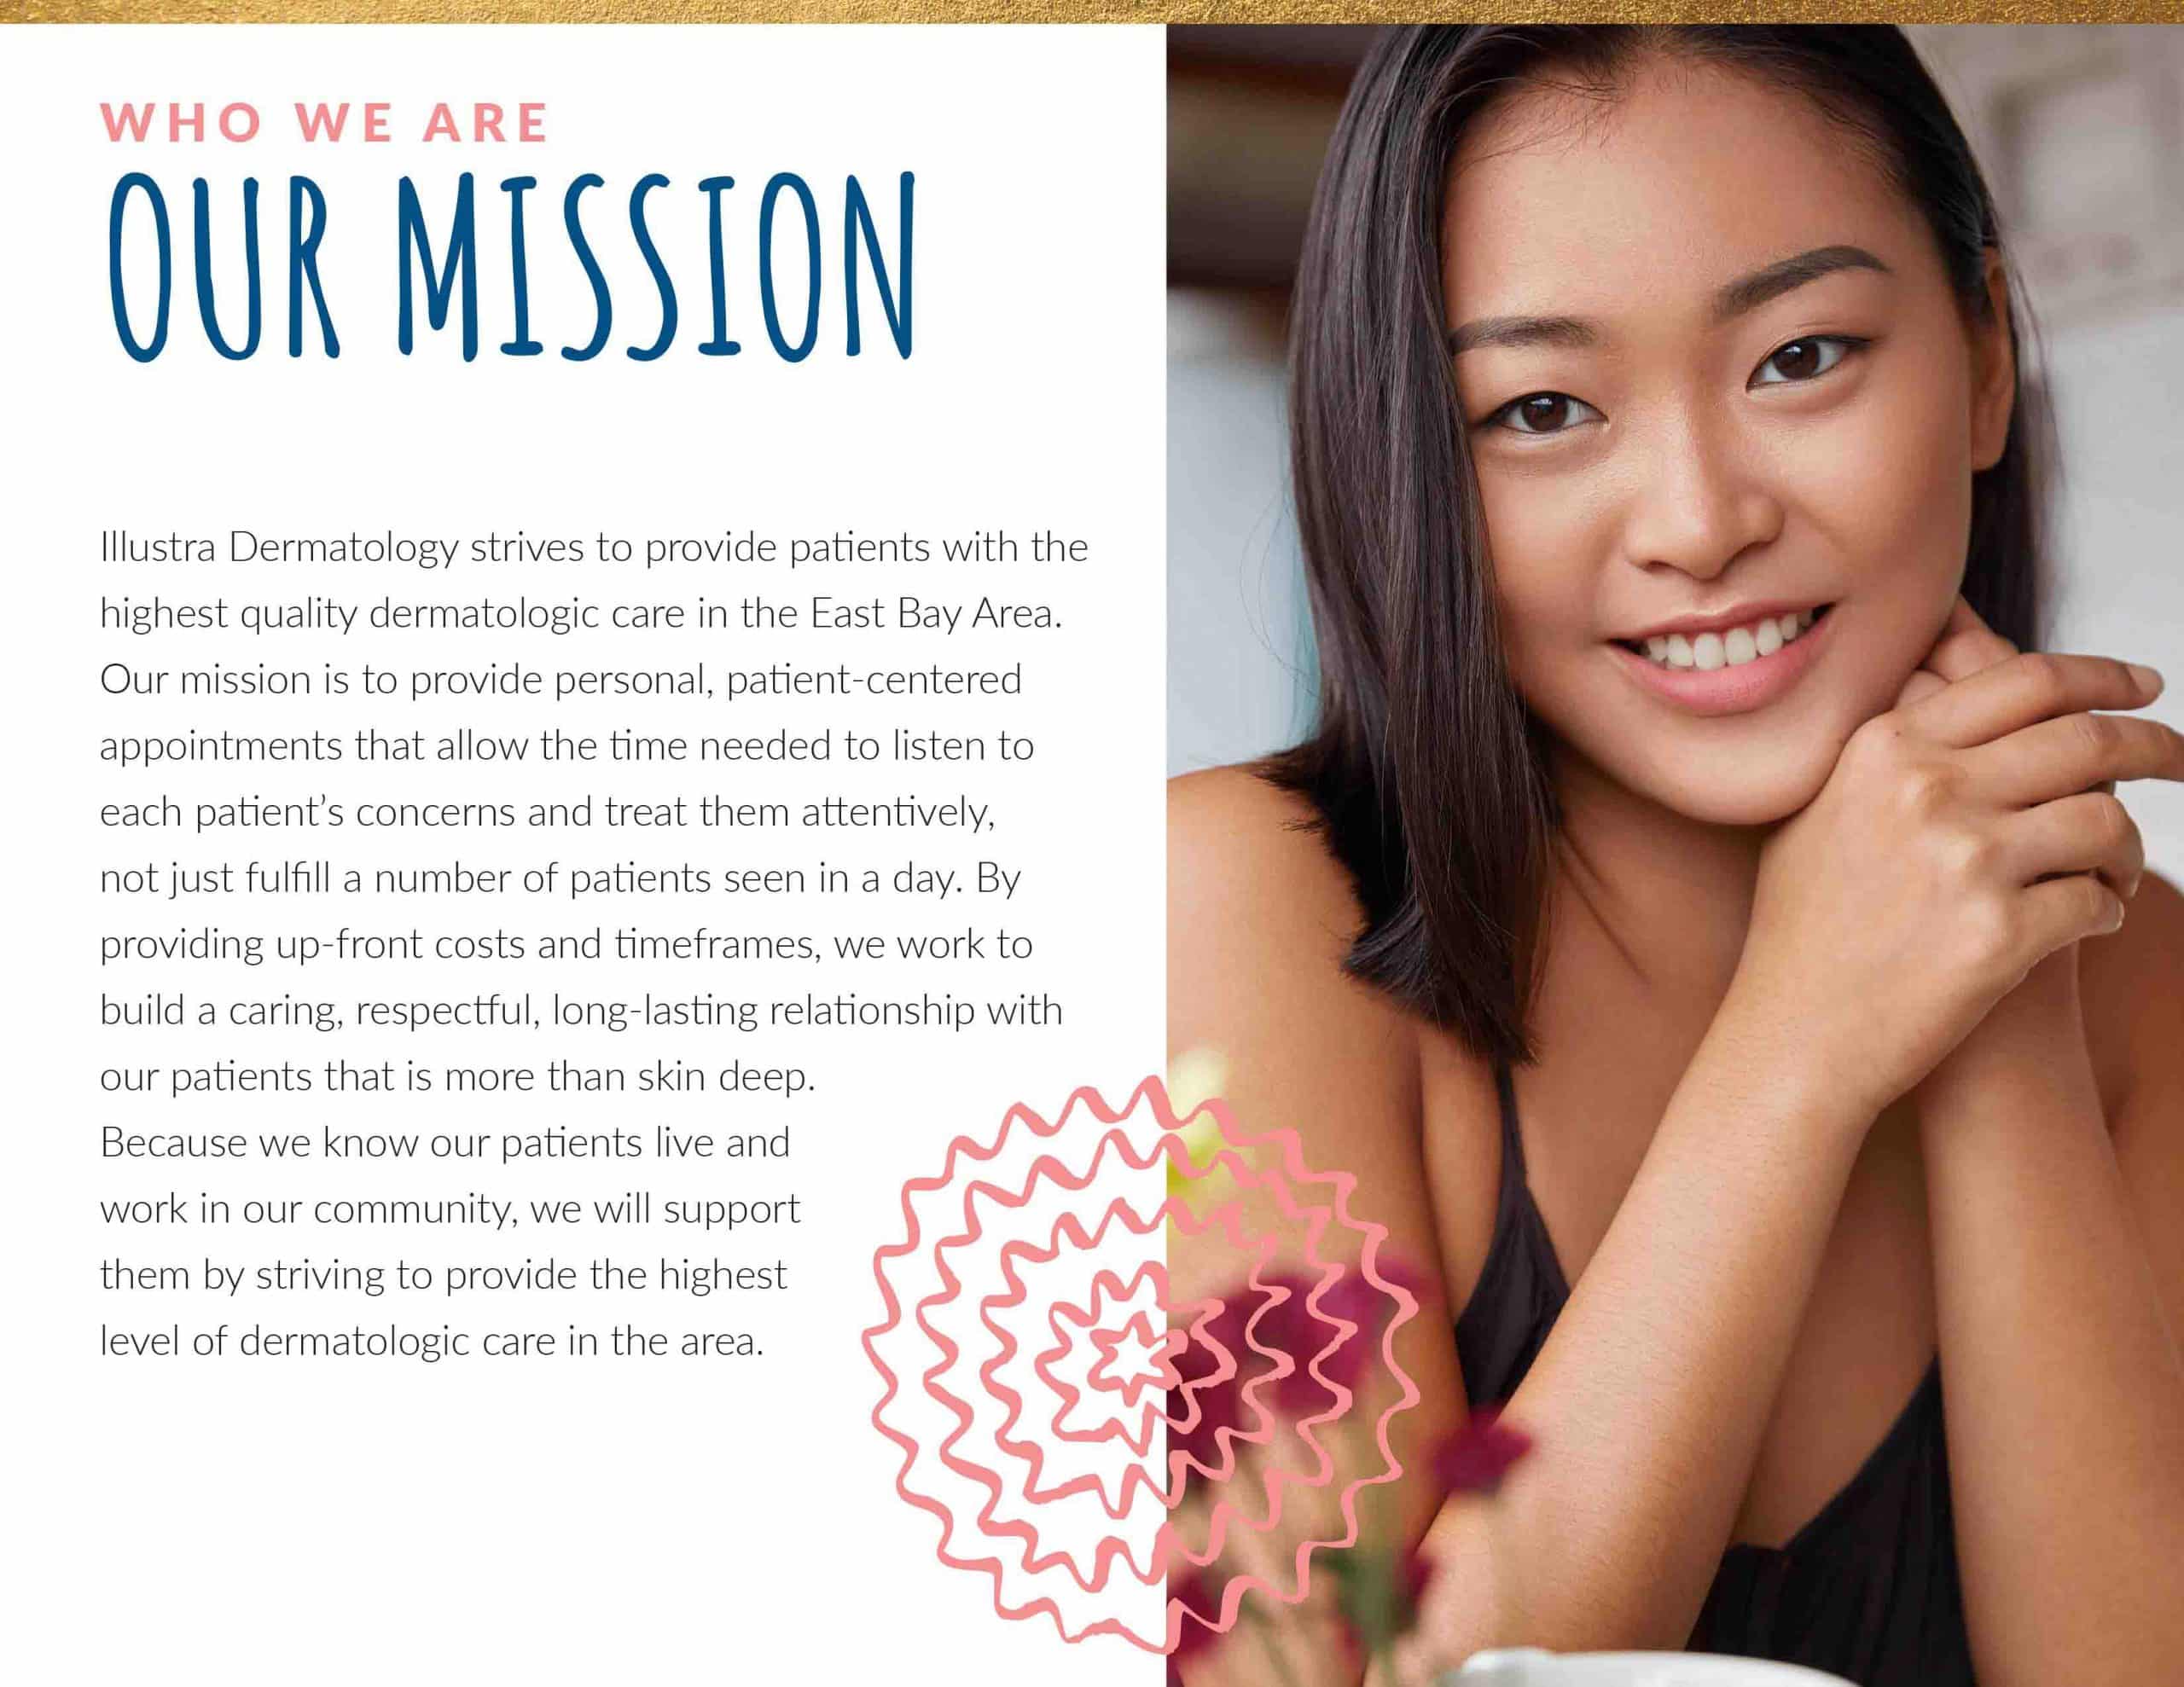 Illustra Dermatology Brand Guide - Mission